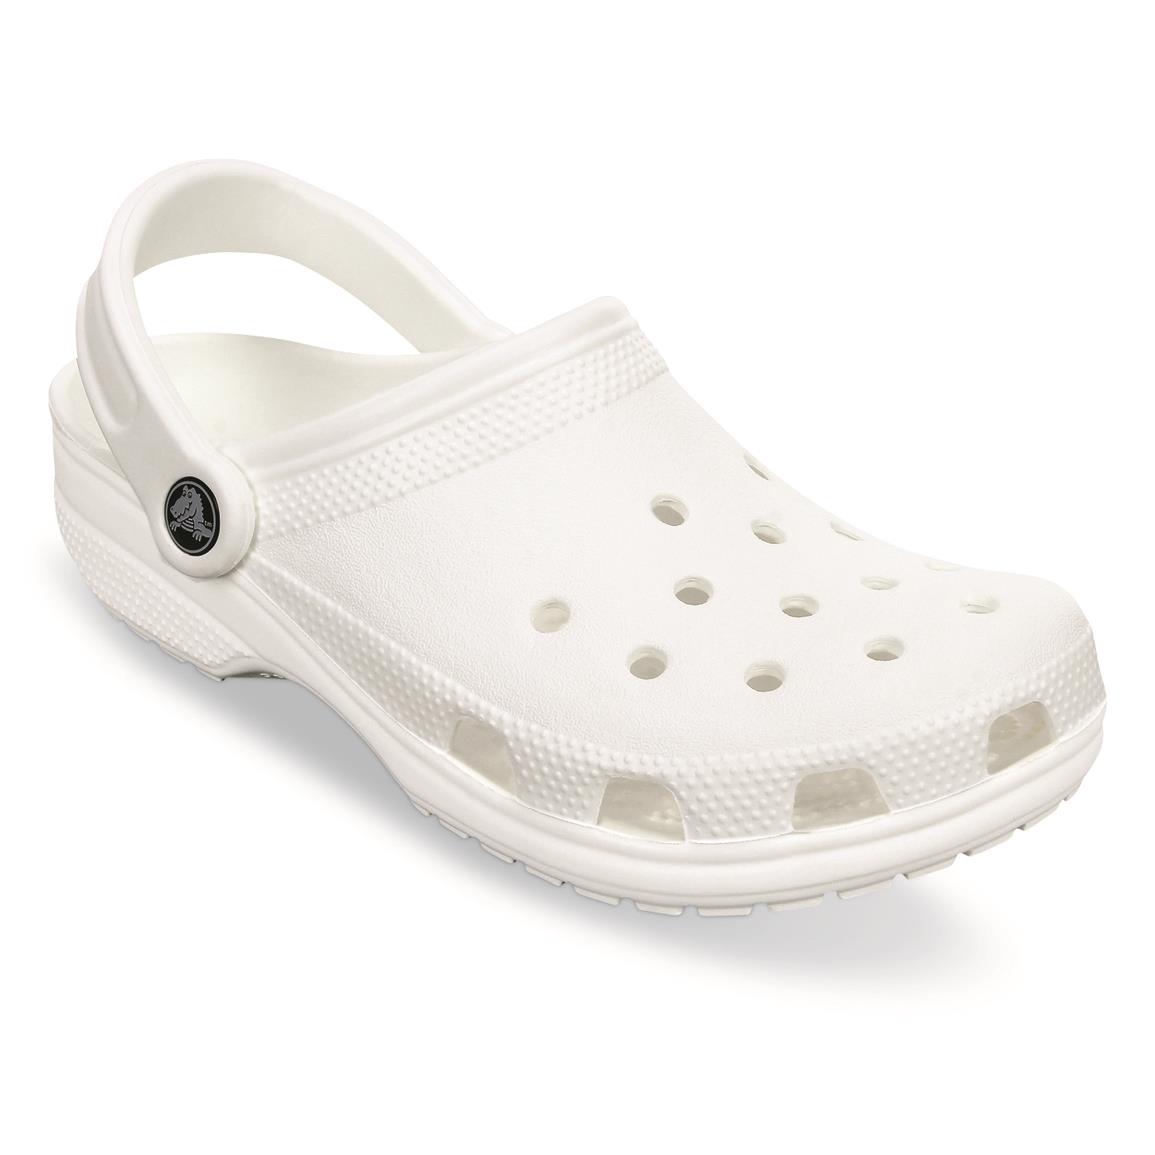 Crocs Women's Classic Clogs, White